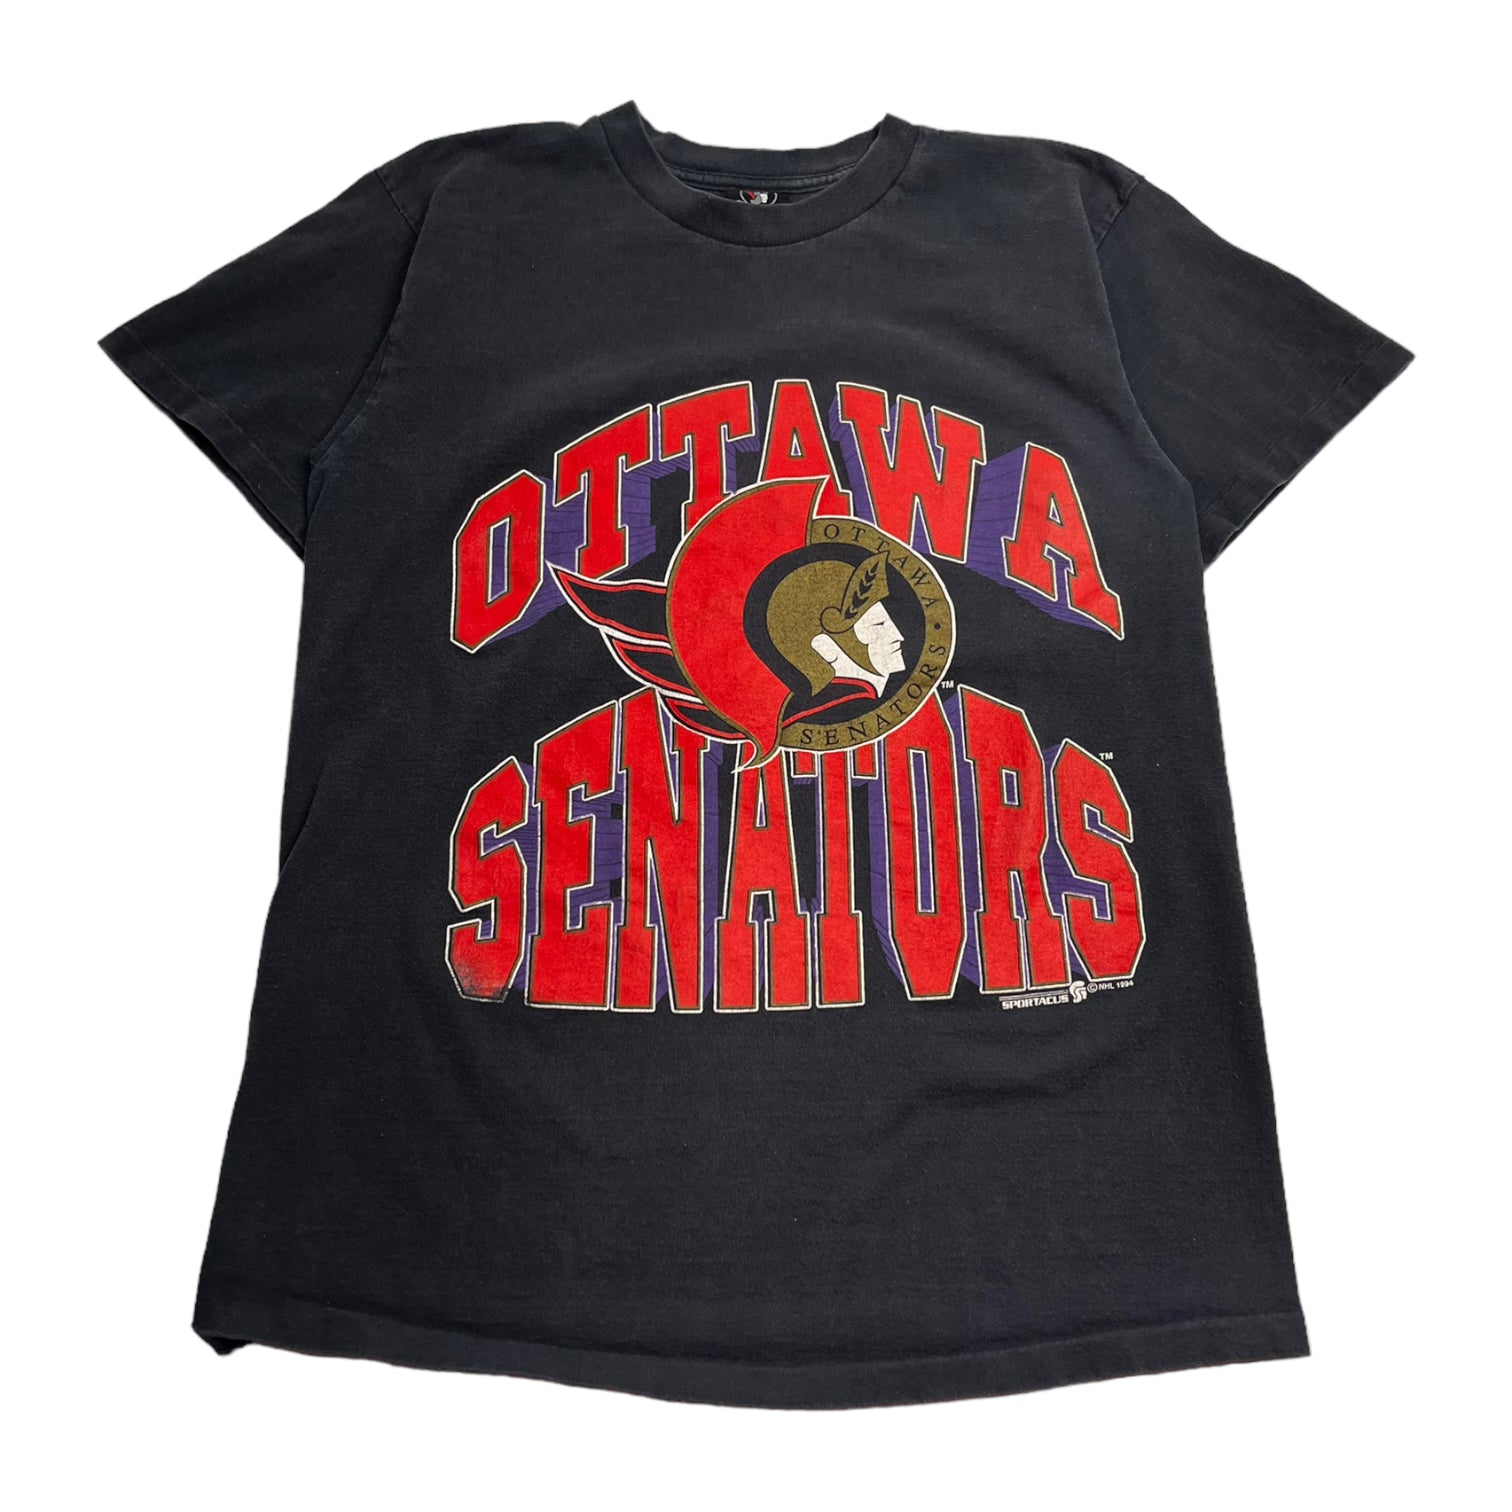 1994 Ottawa Senators Tee Black